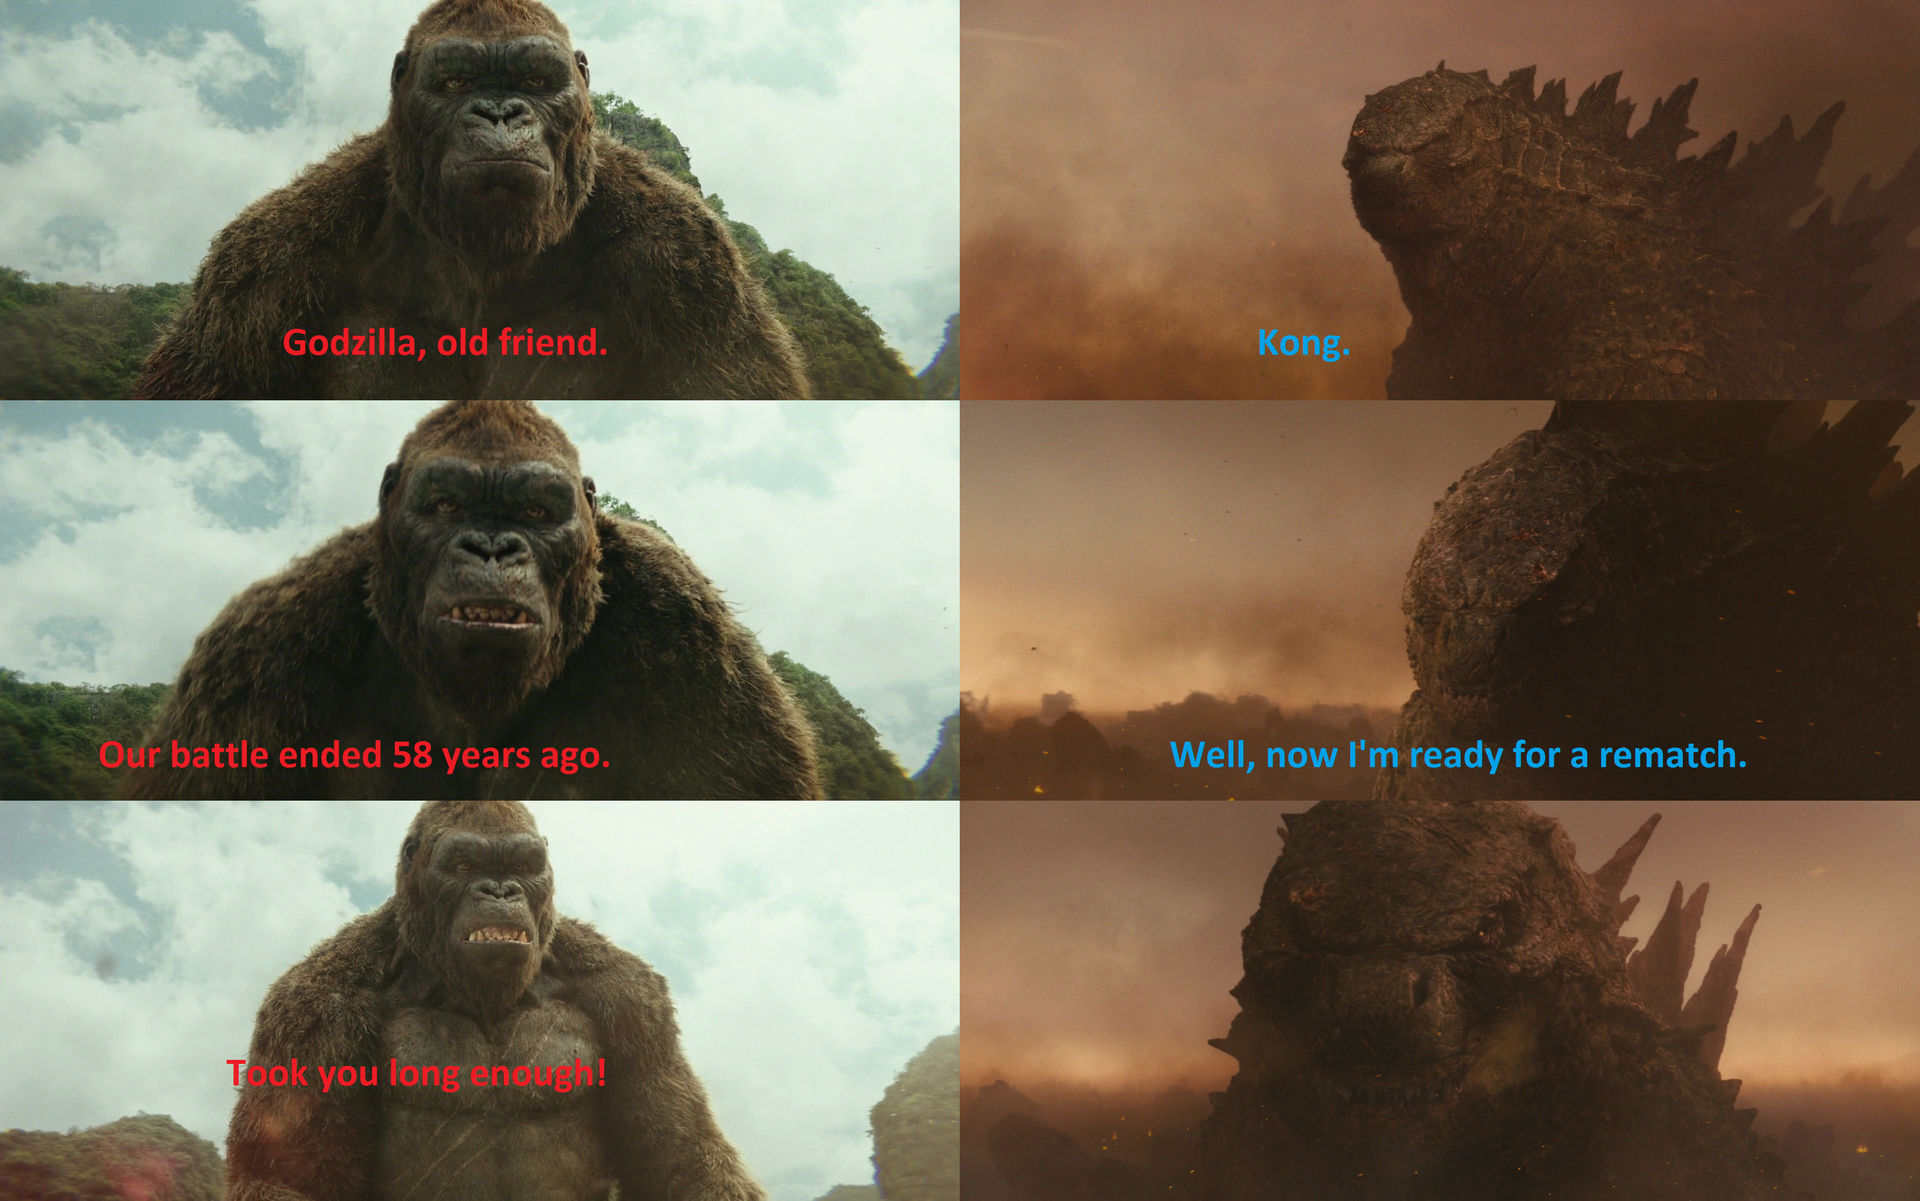 Kong and Godzilla The Rematch! by MnstrFrc on DeviantArt